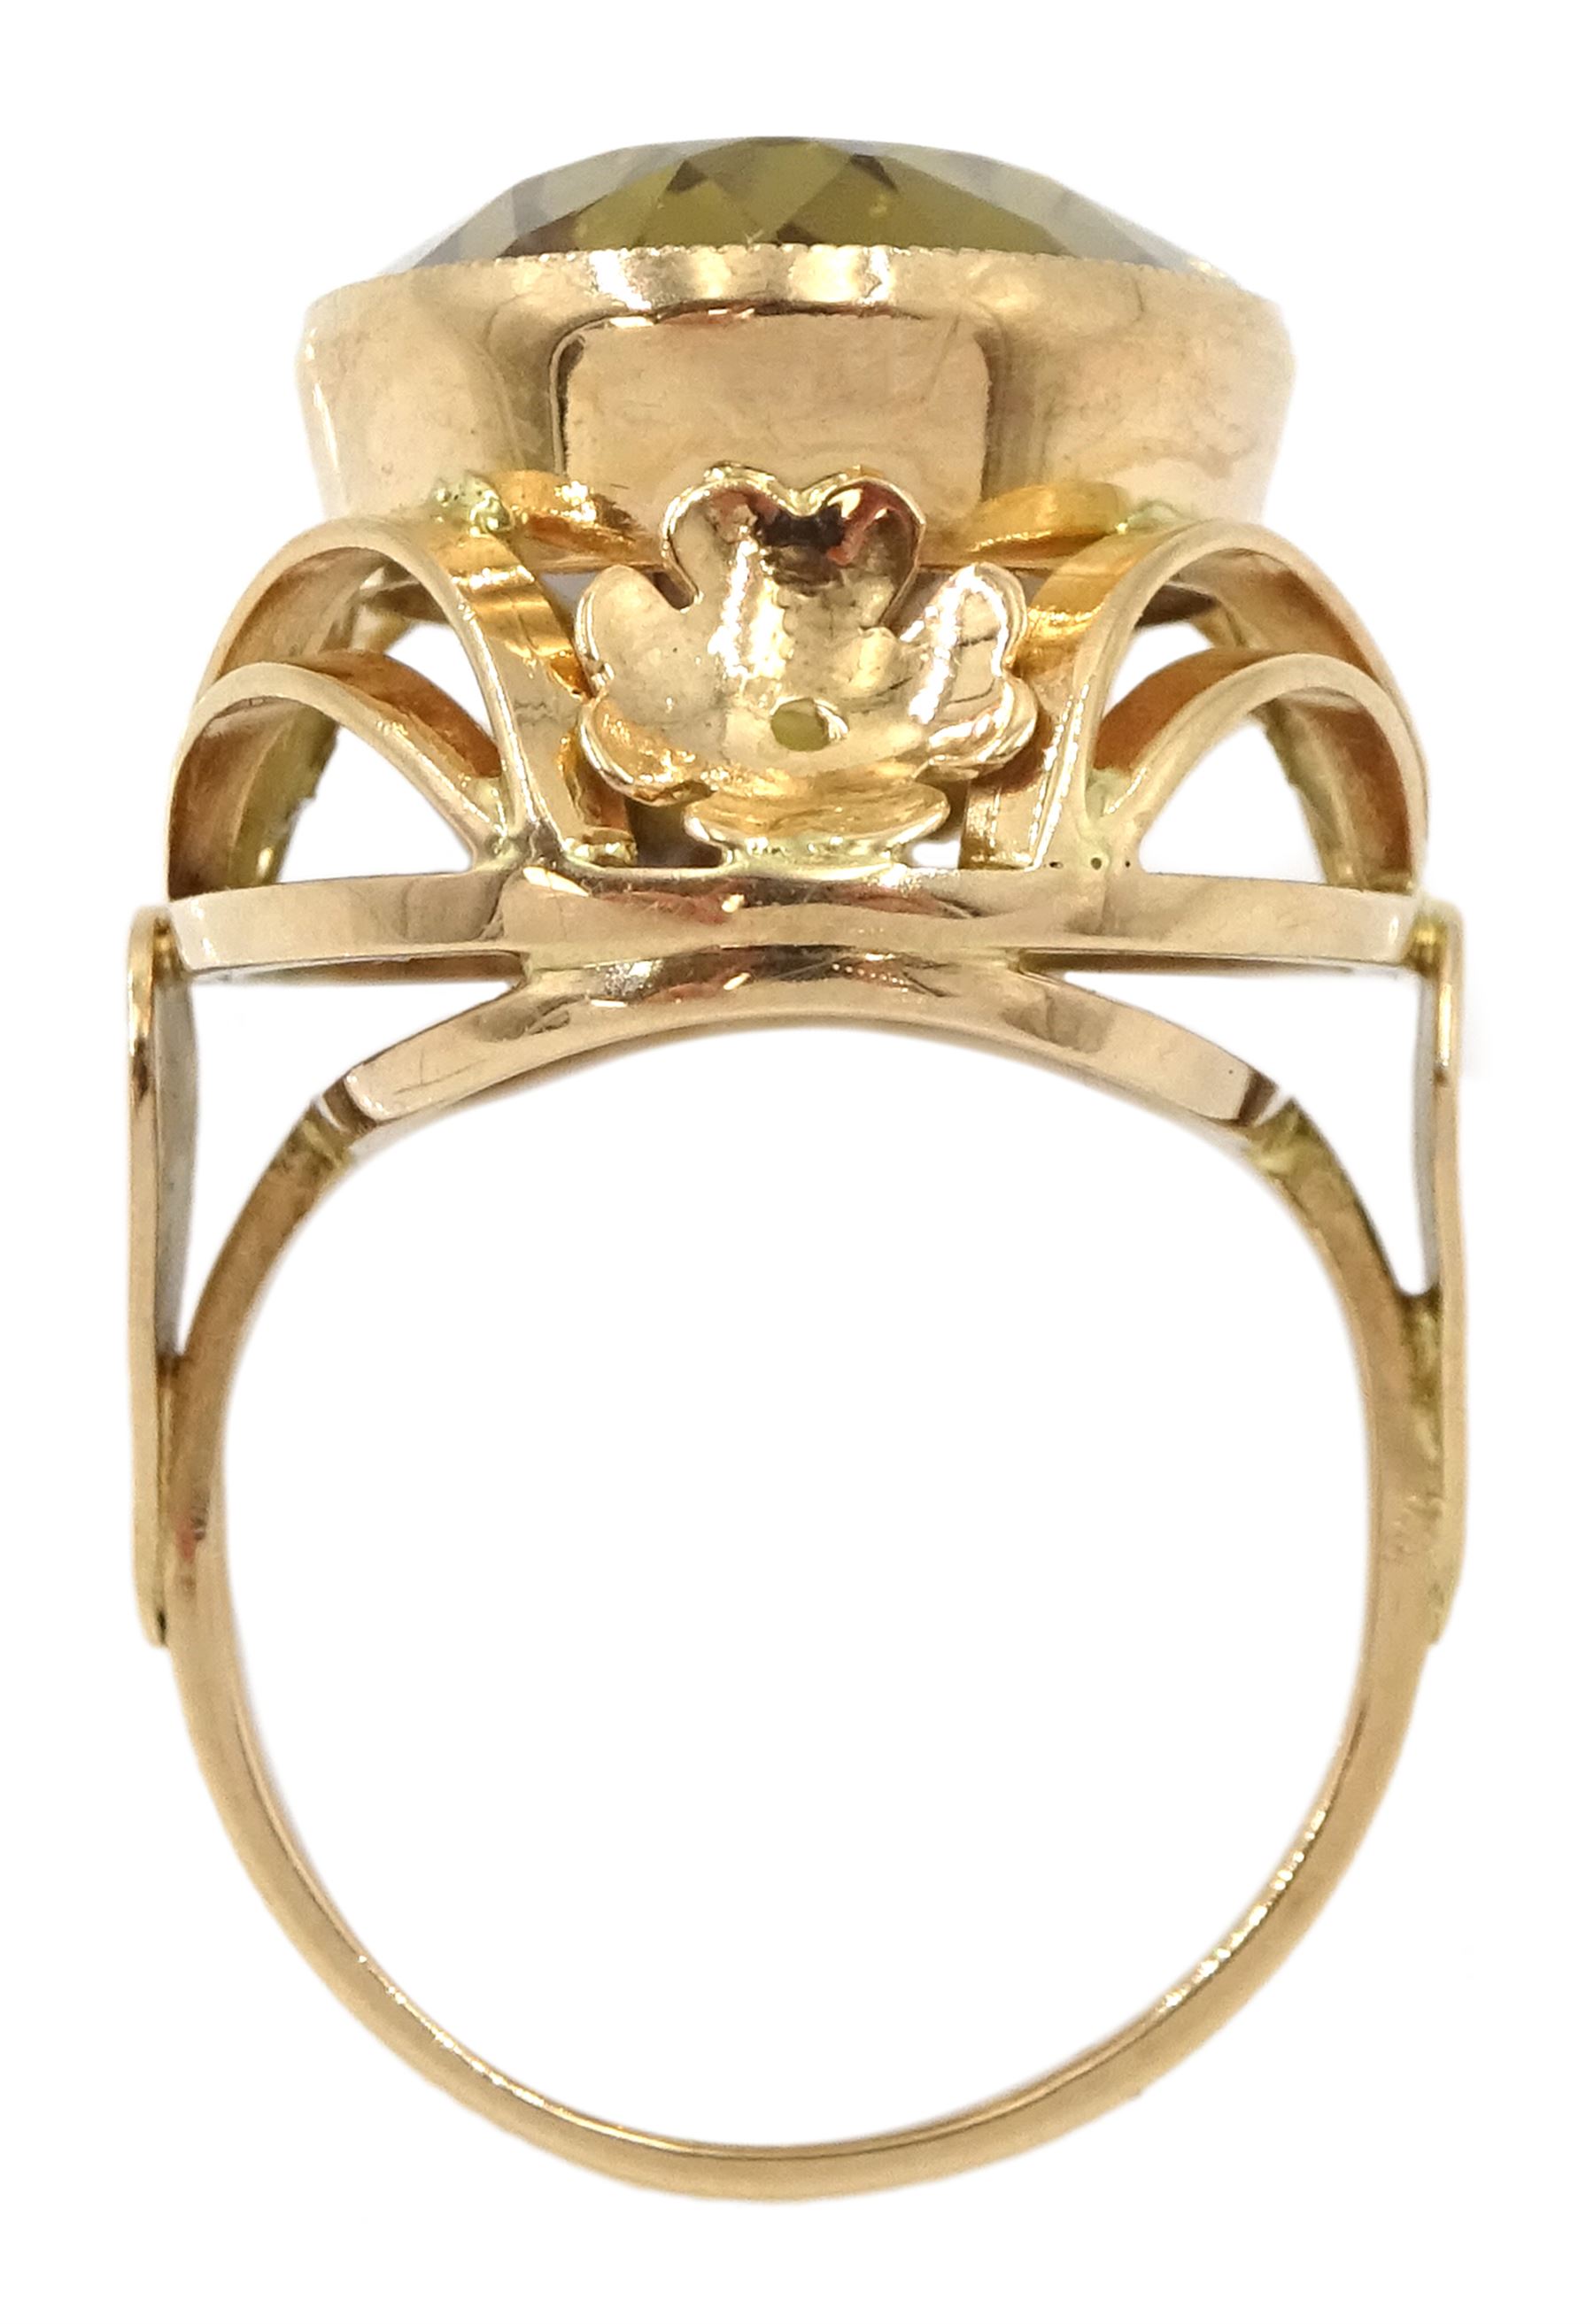 14ct rose gold large single stone oval citrine ring - Image 4 of 4